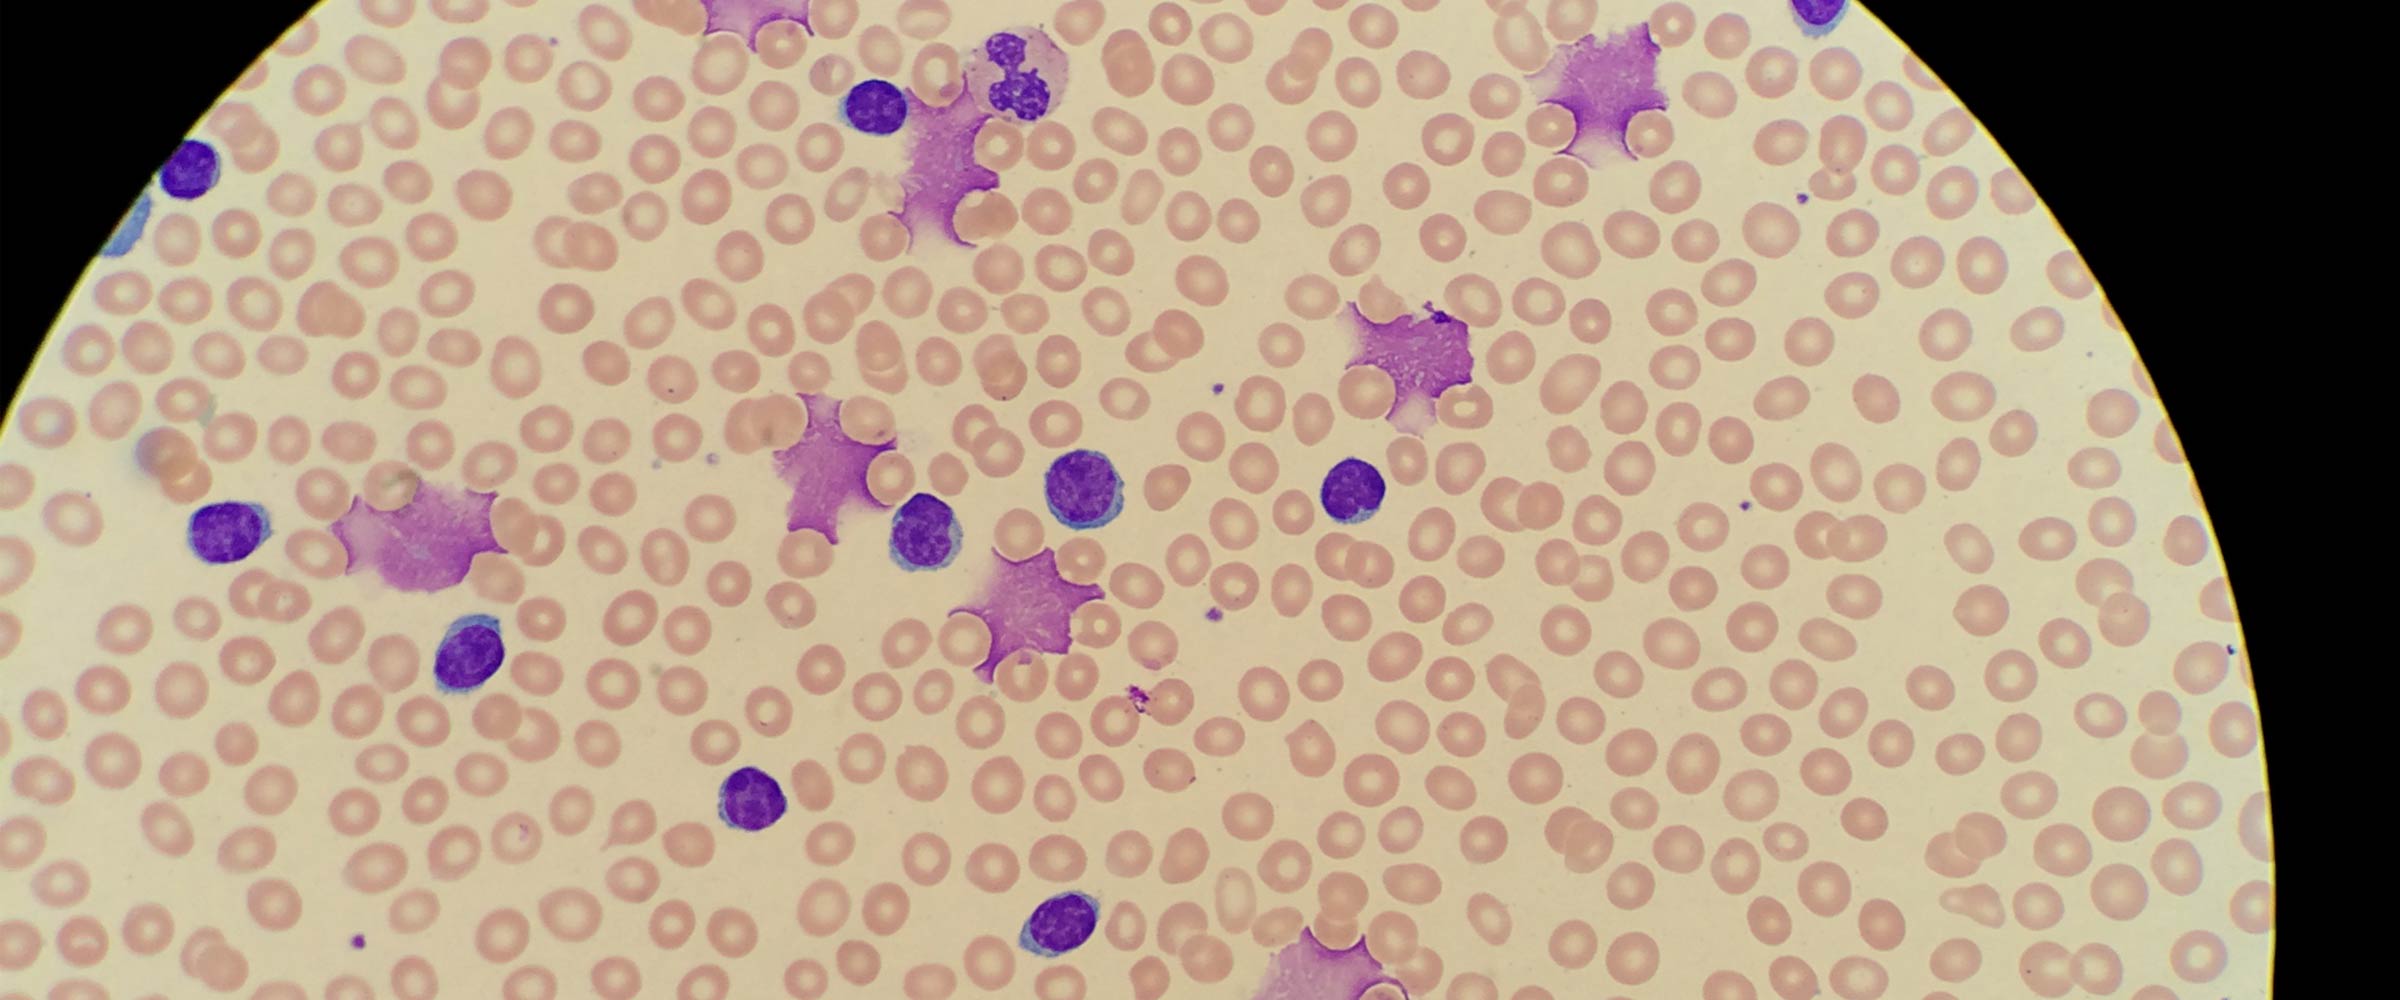 Chronic lymphocytic leukemia (CLL) cells under microscope